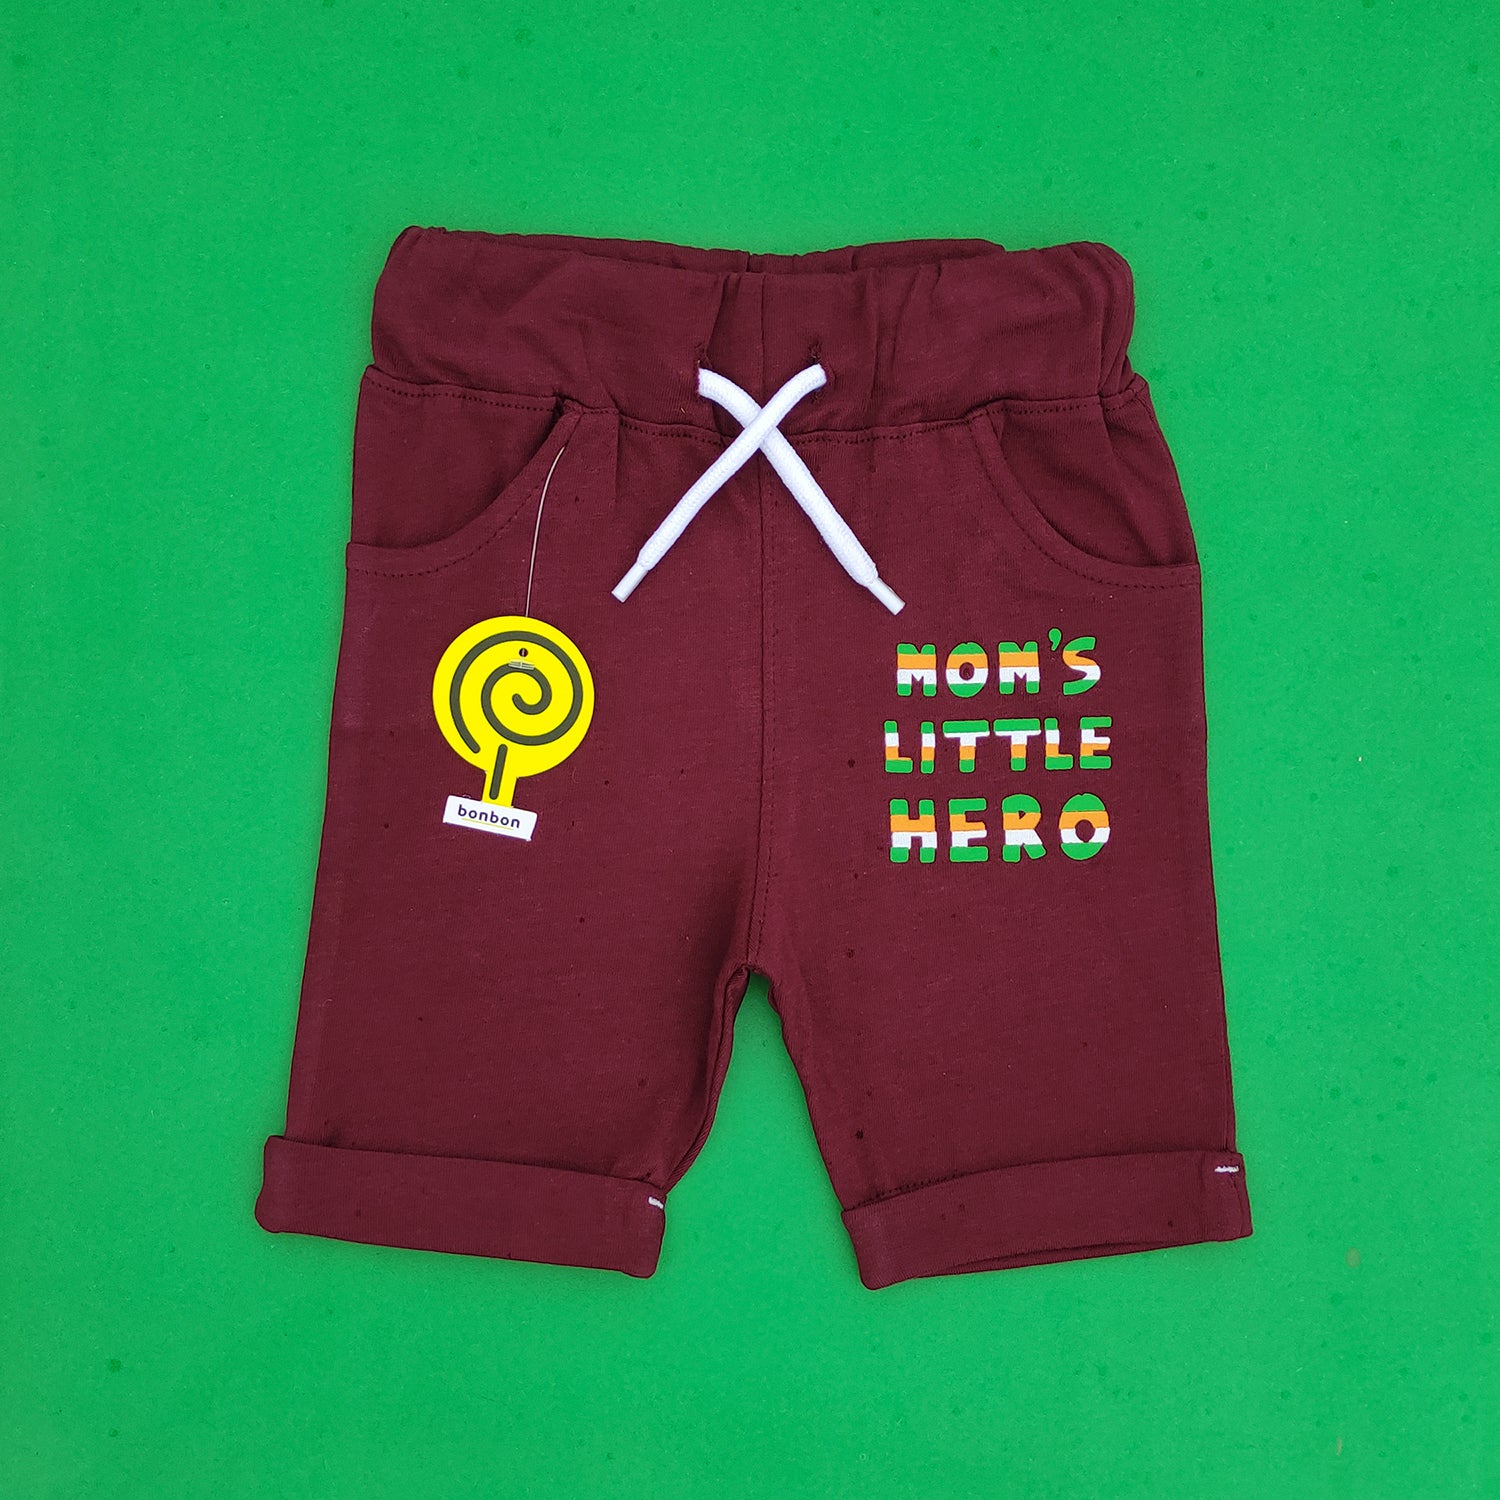 Mom's Little Hero Maroon Shorts